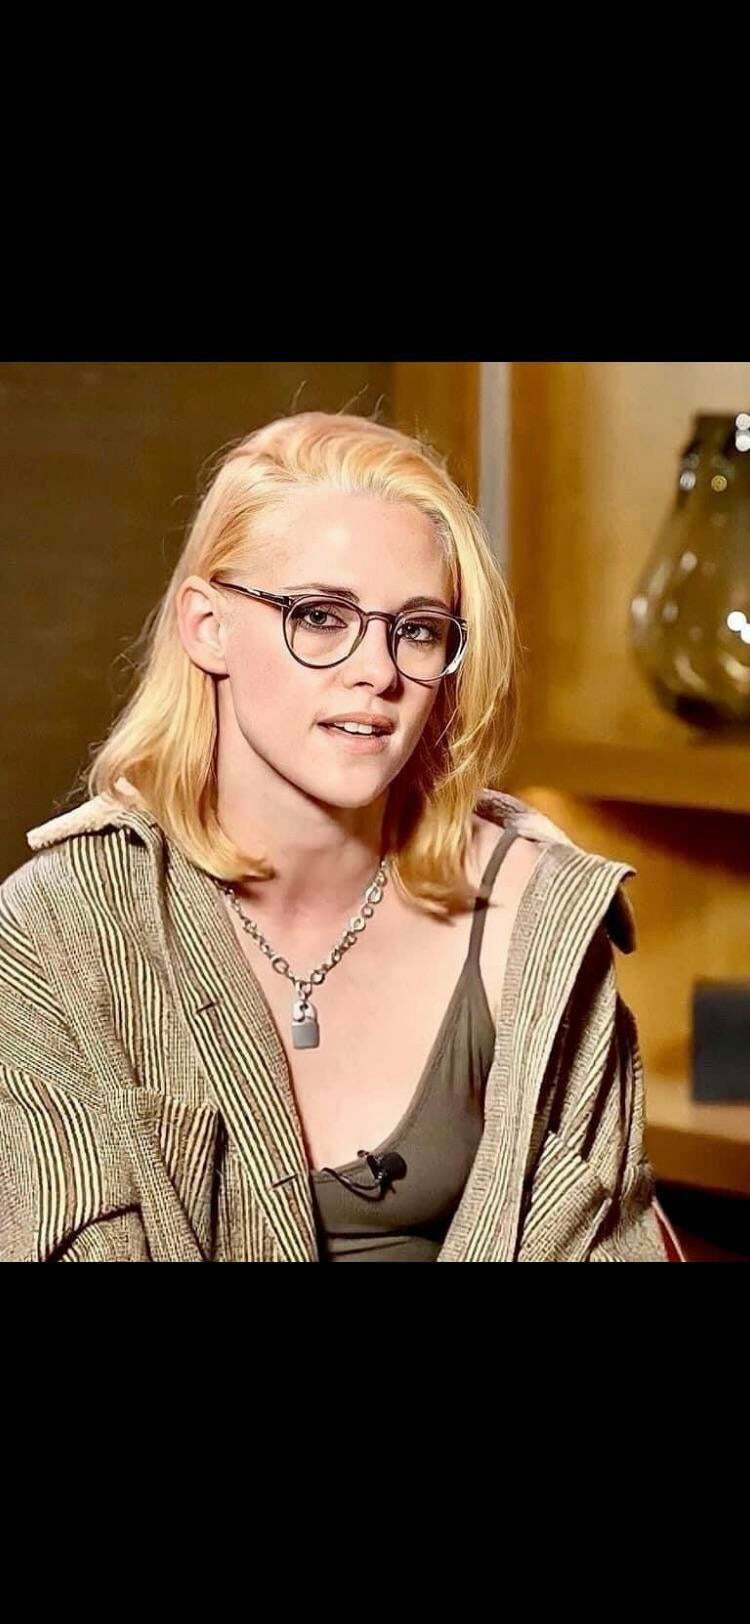 Kristen Stewart in glasses is the highlight of my weekend